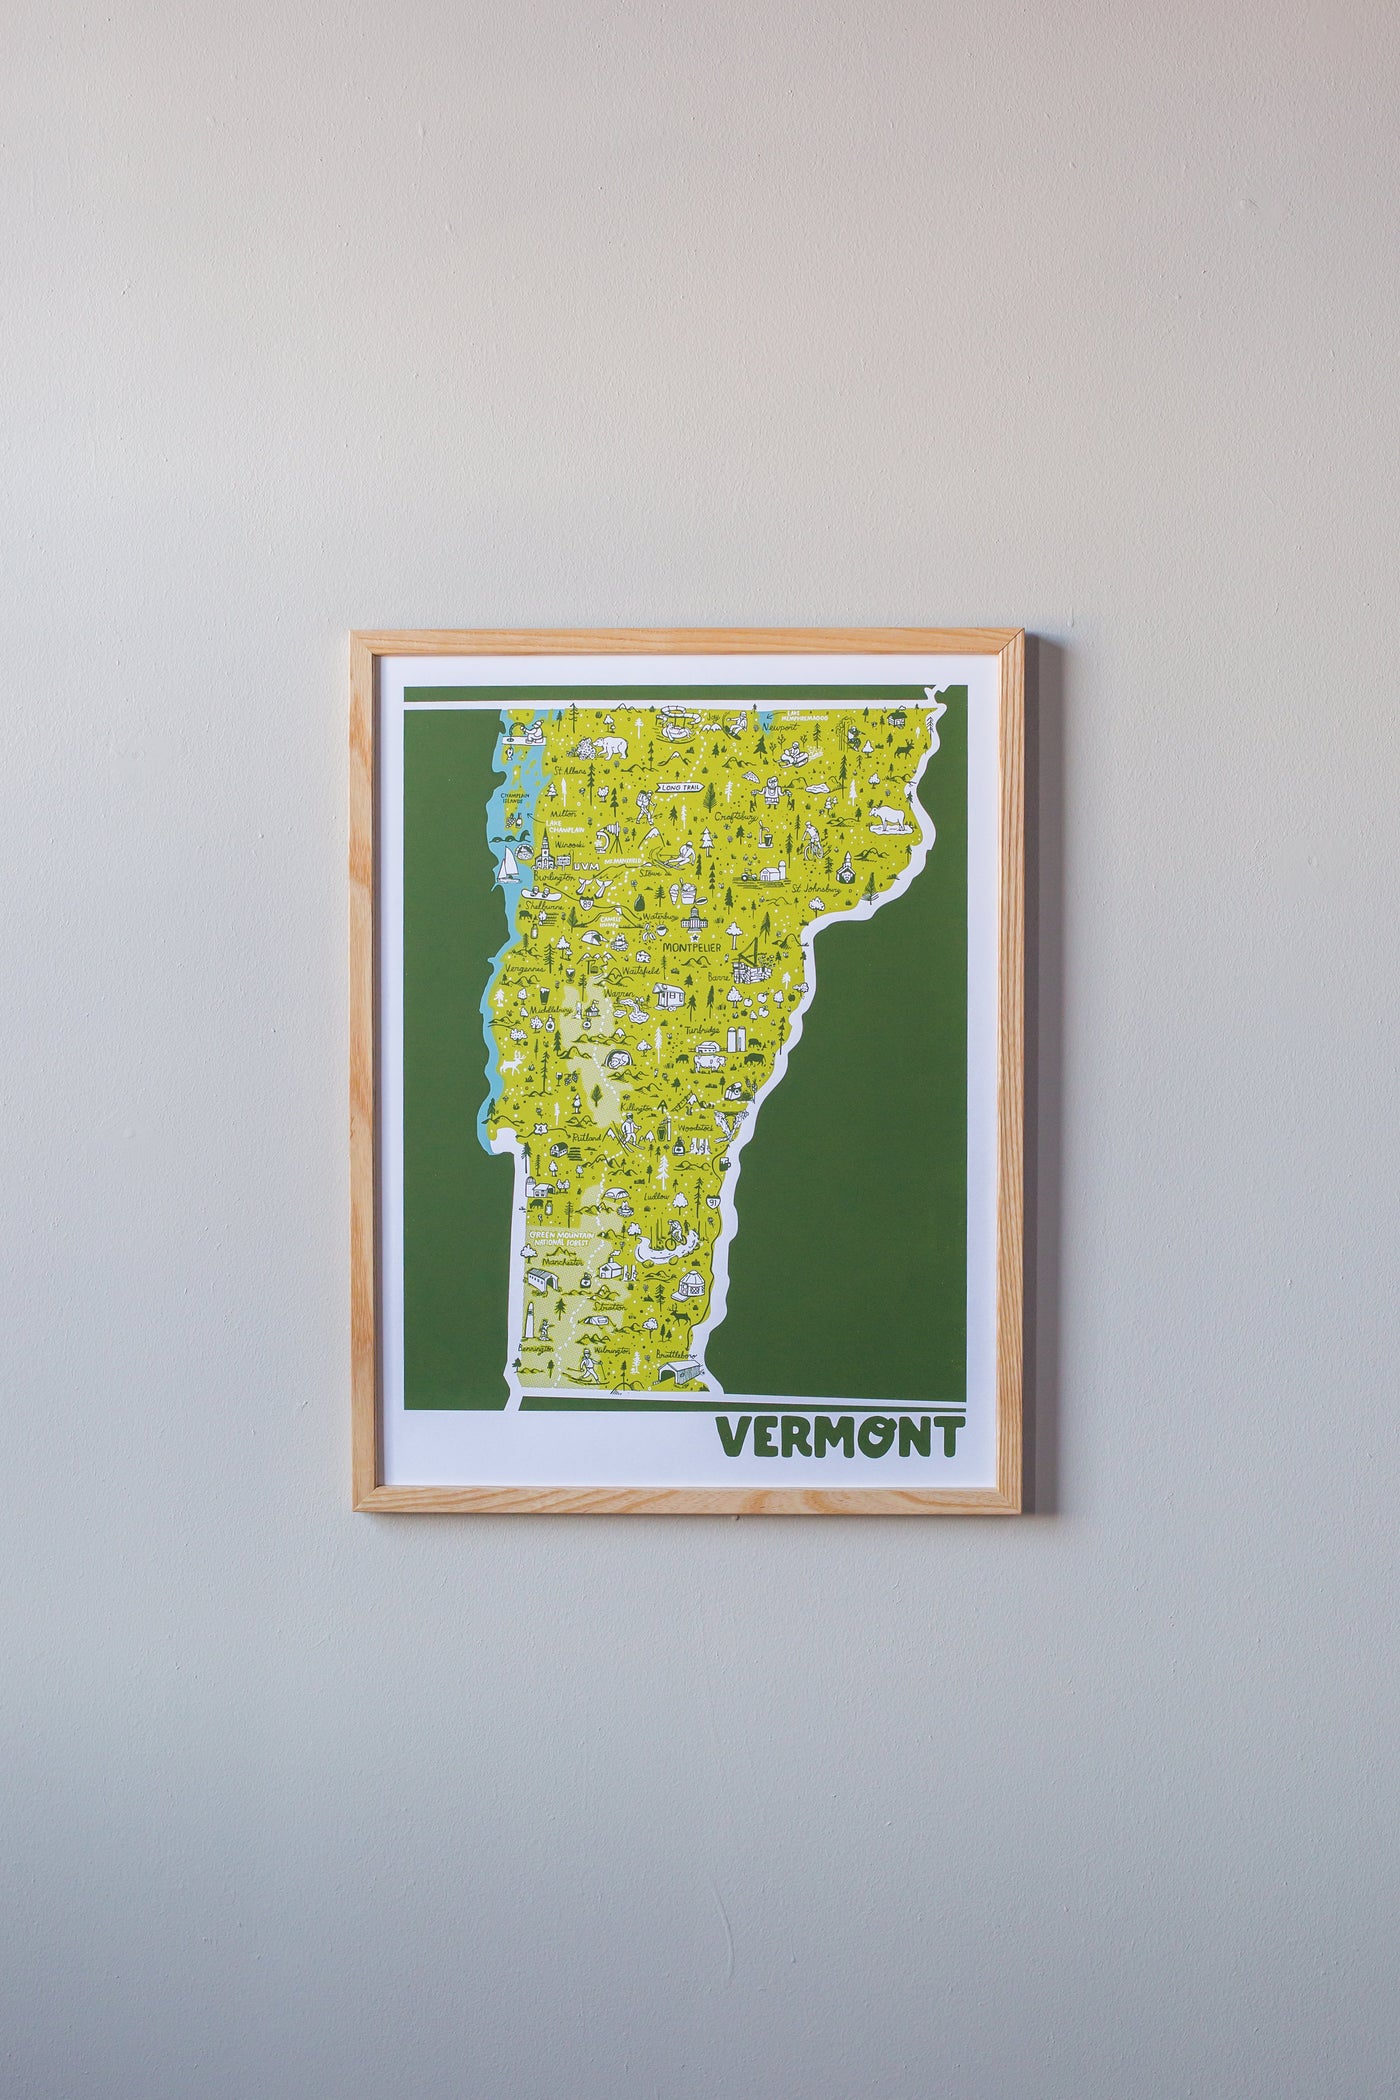 Vermont Map Print by Brainstorm - Visit Vermont! The Green Mountain State - Middlebury, Burlington, Waterbury, Woodstock, Rutland, Stowe, Ludlow, Shelburne 